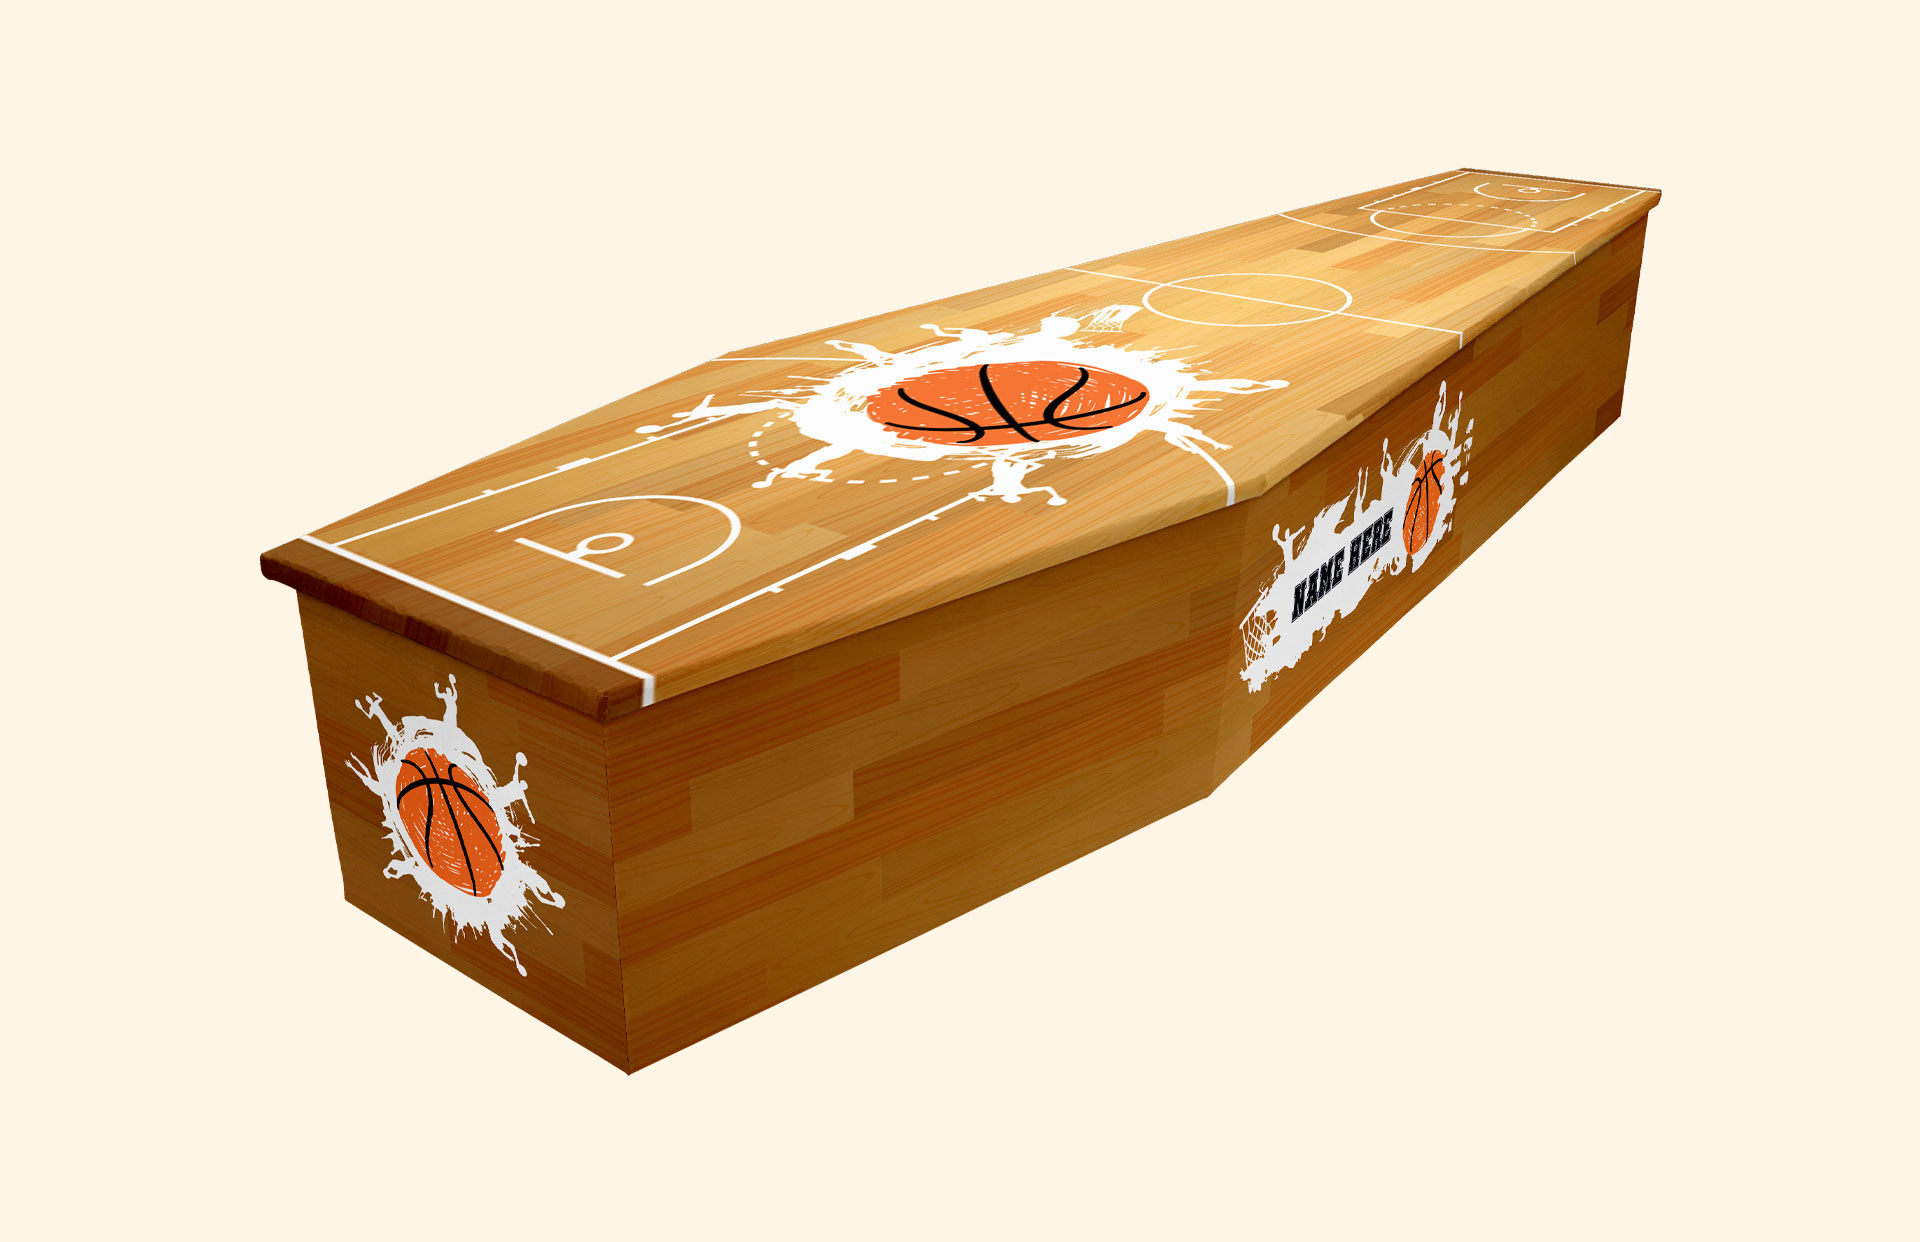 Hoops design on a cardboard coffin